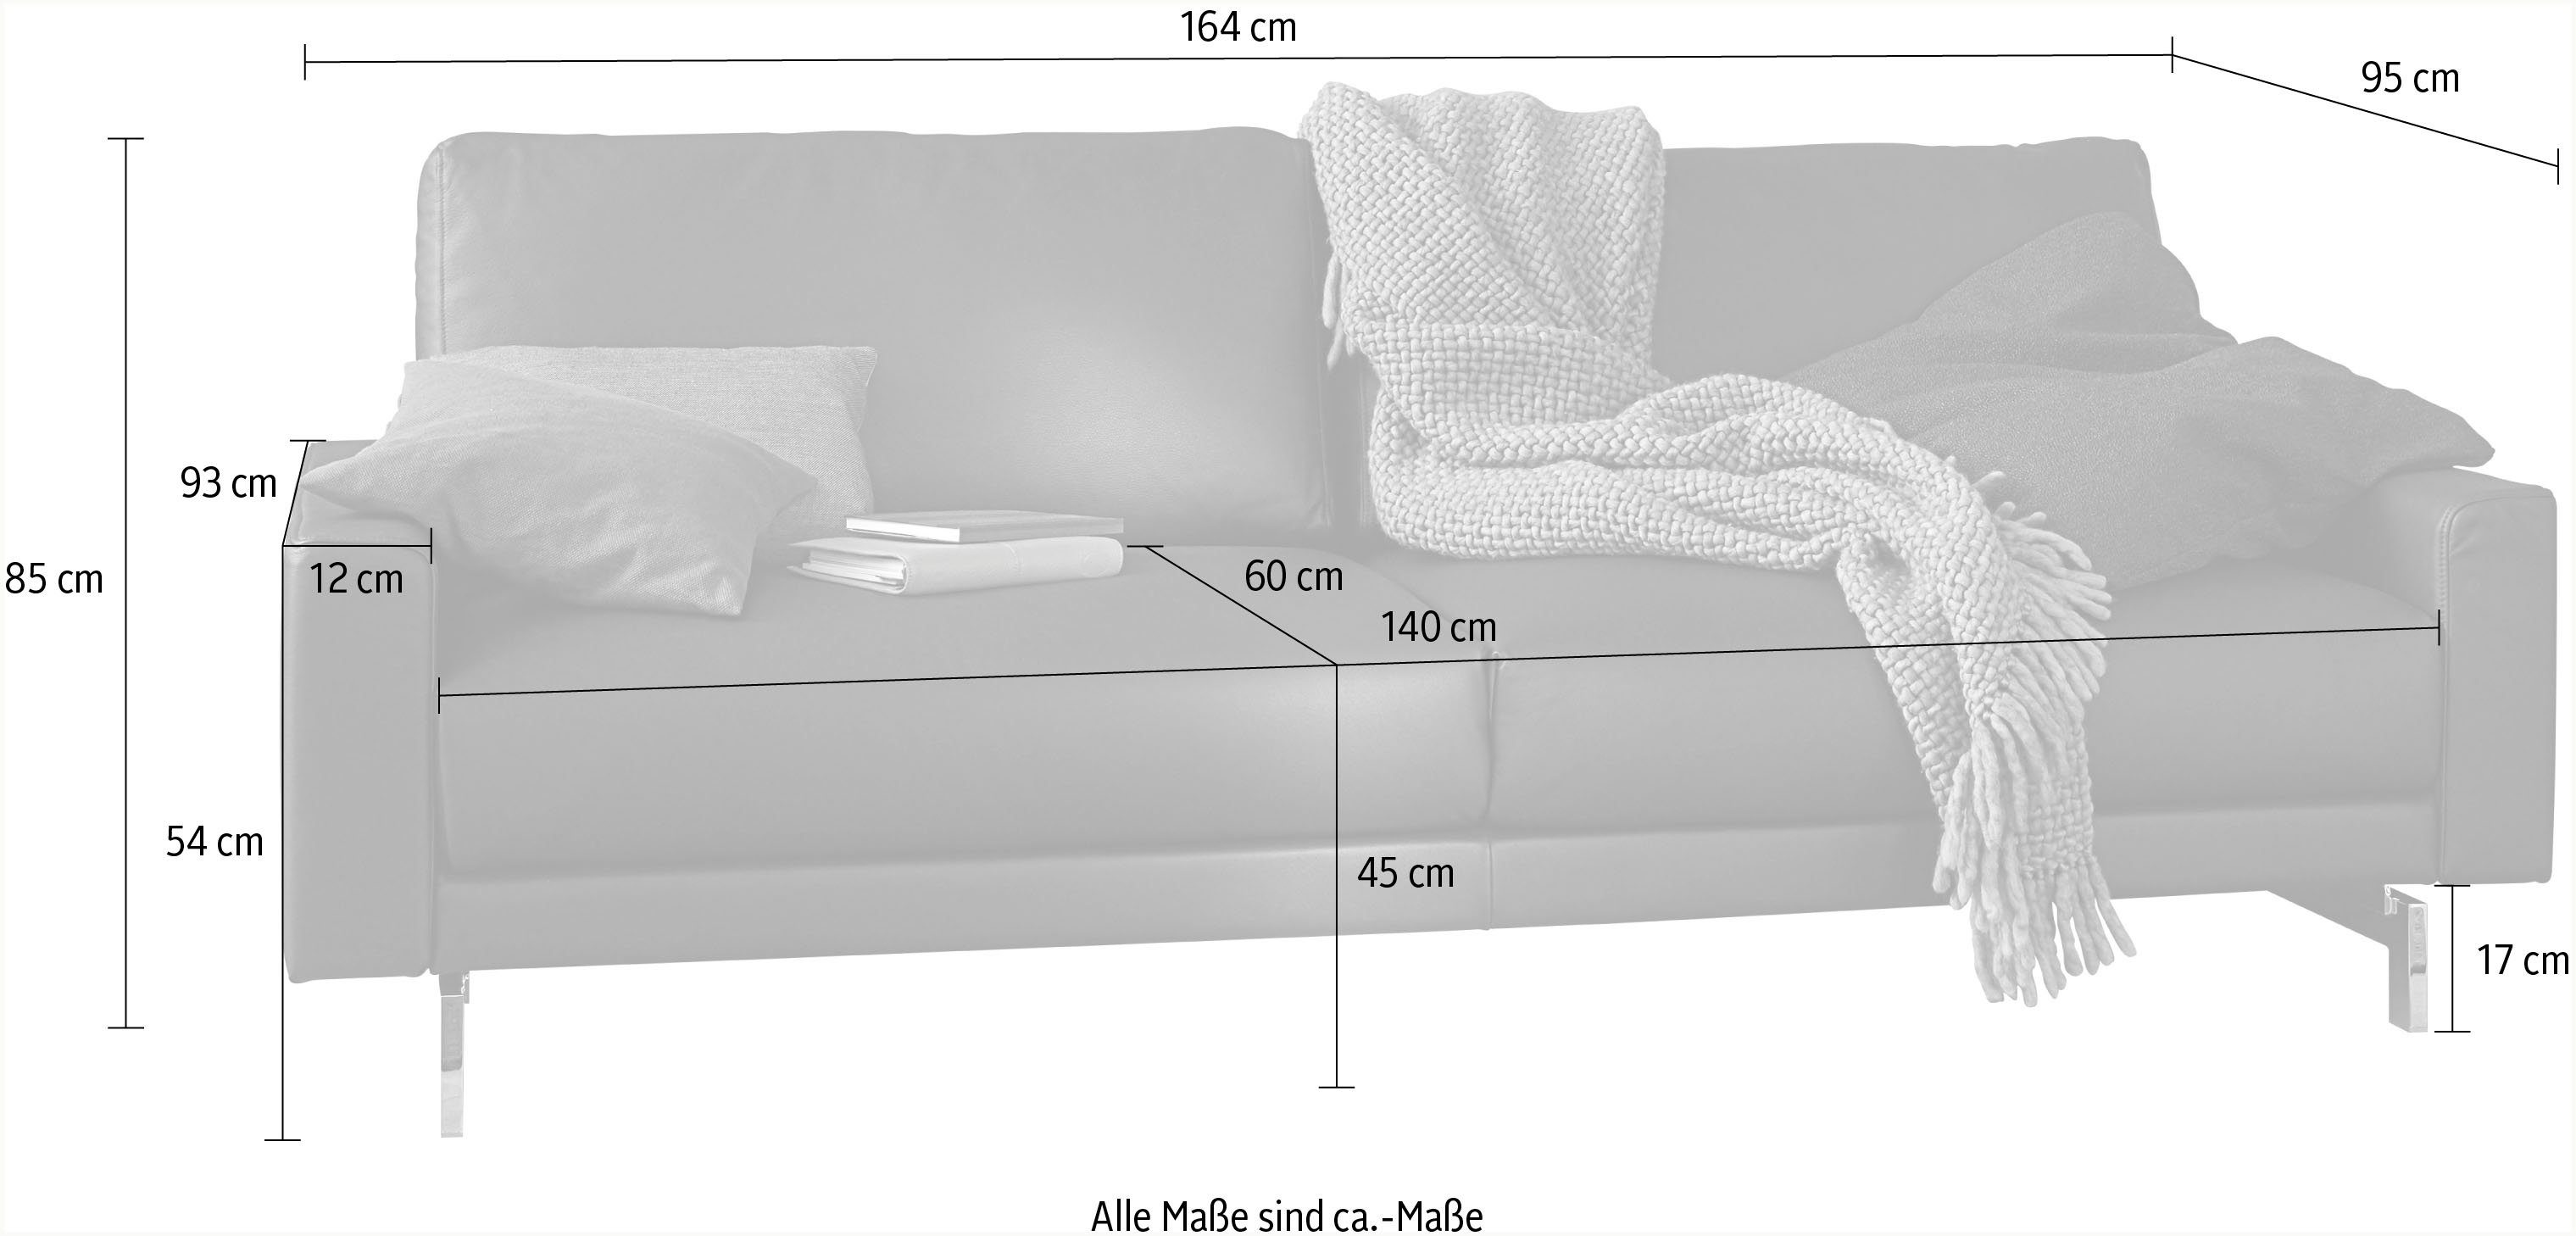 2-Sitzer Armlehne hülsta hs.450, cm Fuß sofa chromfarben niedrig, glänzend, Breite 164